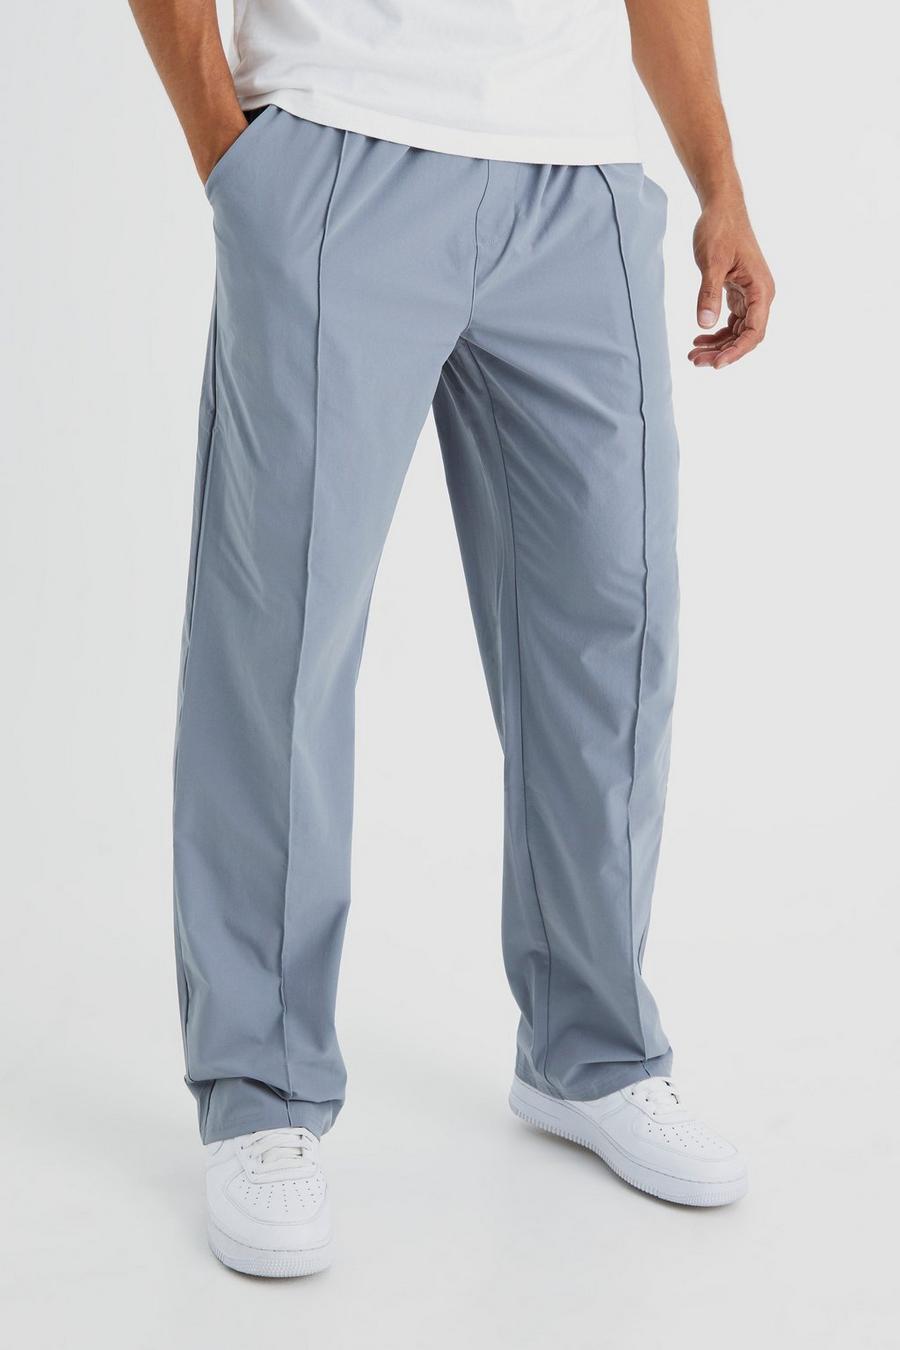 Pantaloni rilassati in Stretch leggeri con nervature e nervature, Light grey